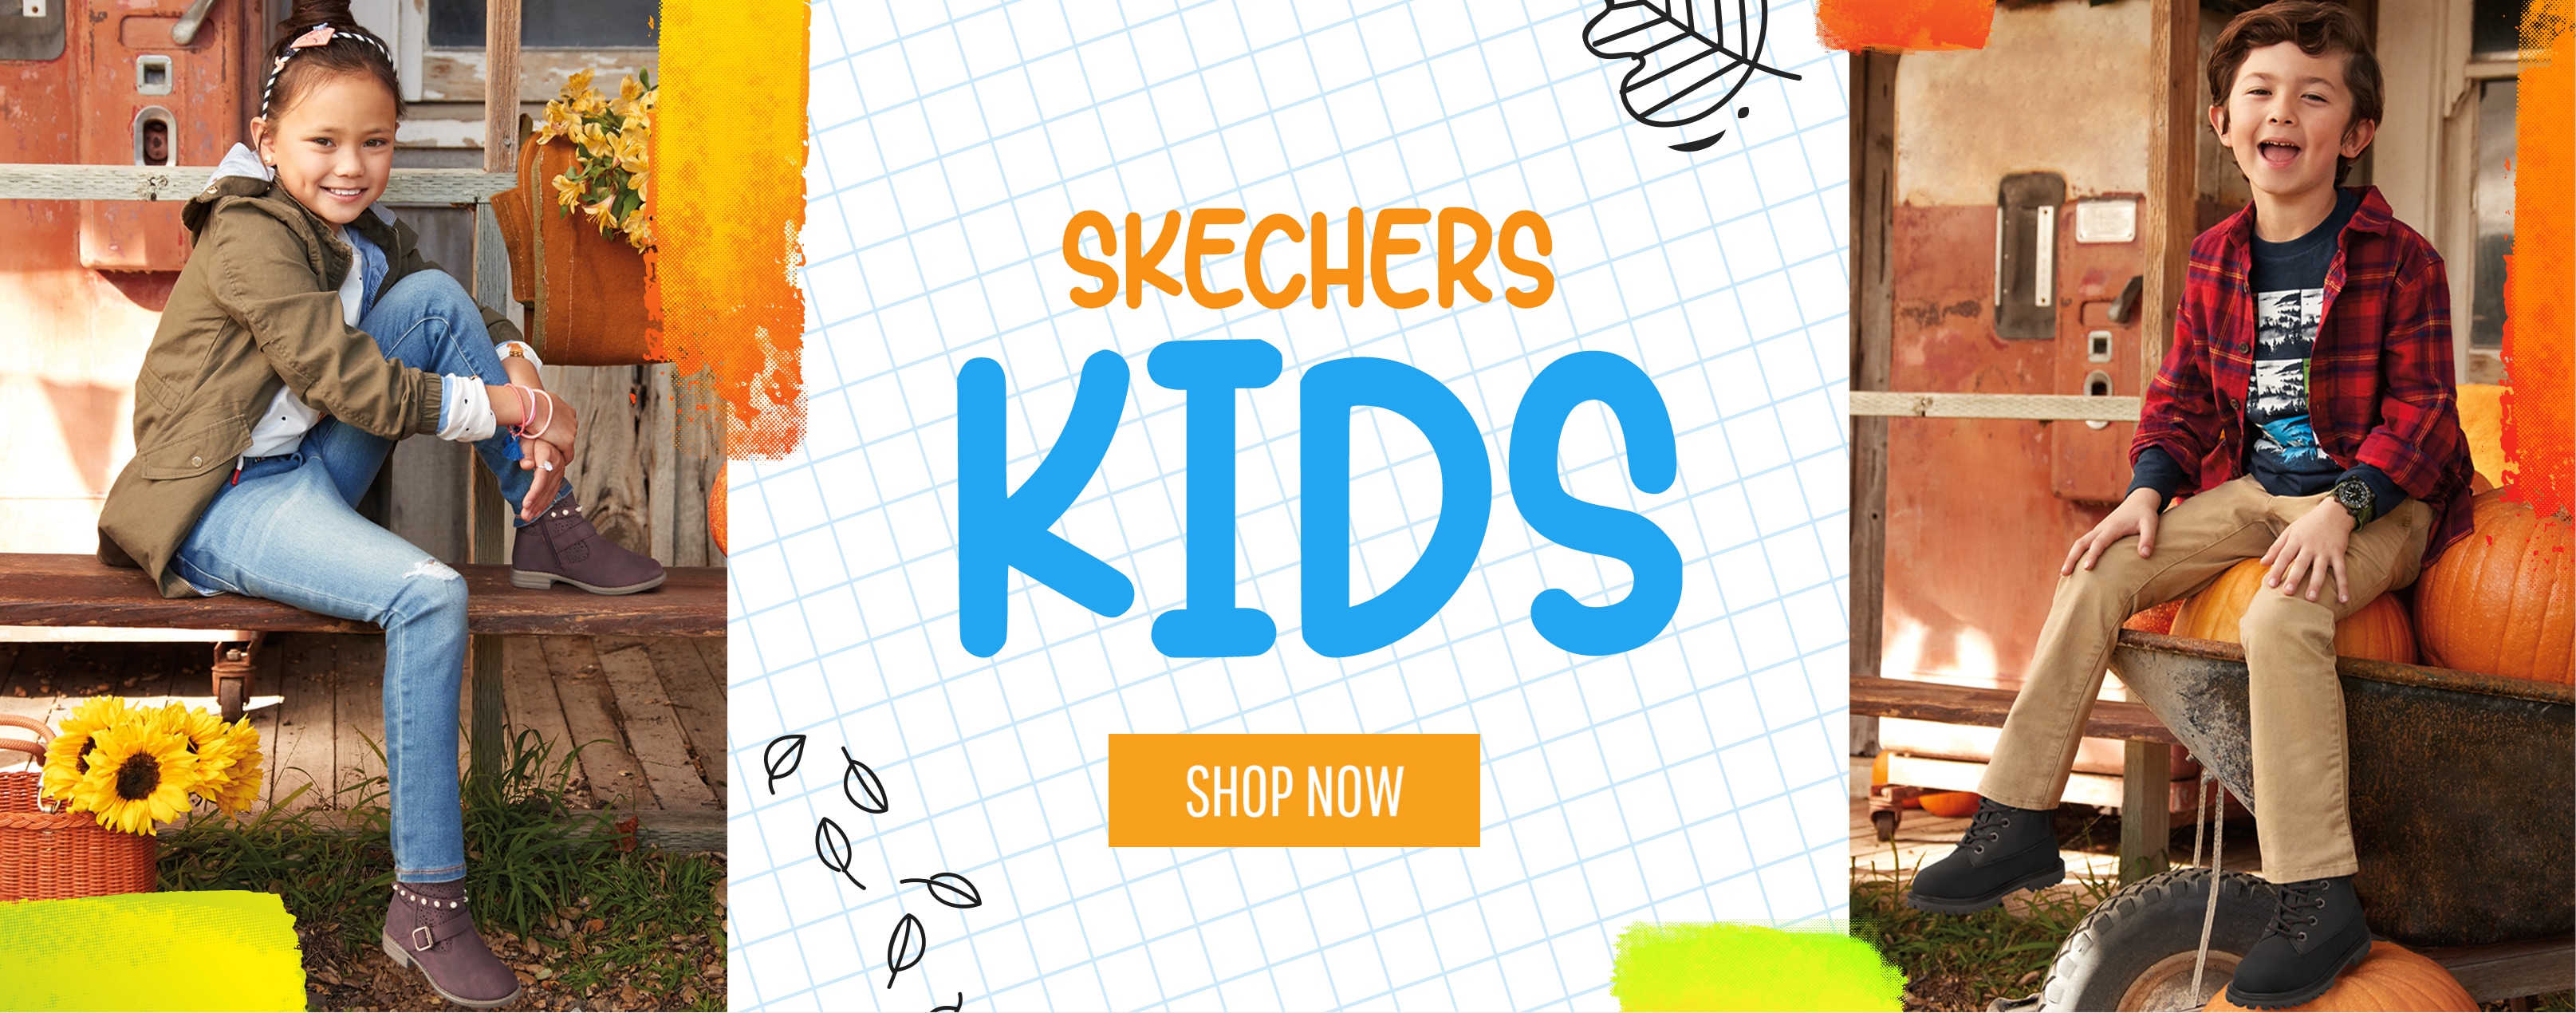 skechers childrens sale